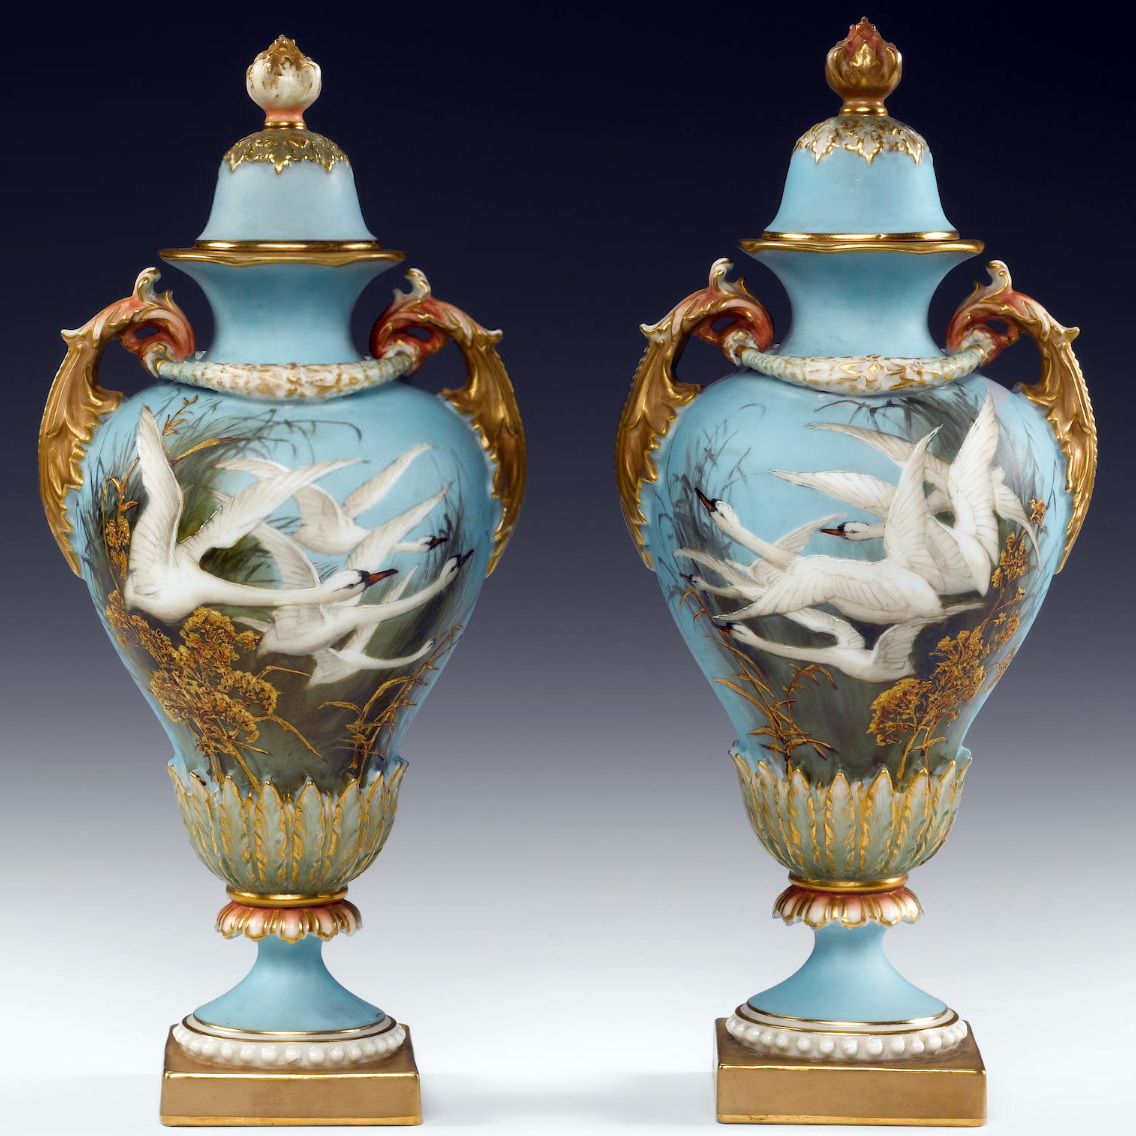 Royal Worcester vases with swans by Charles Baldwyn 1937